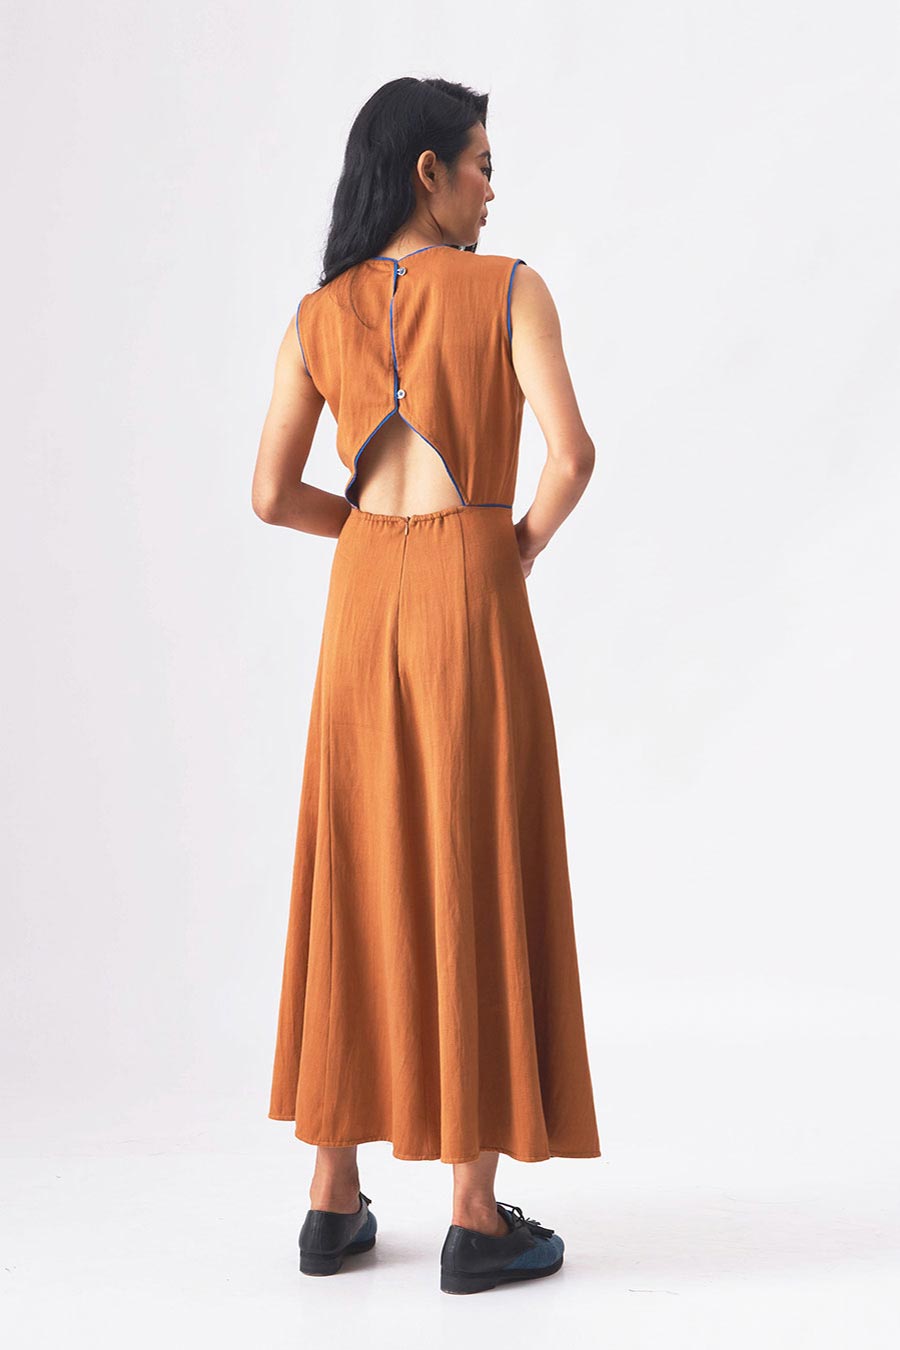 DELANEY - Handloom Denim A-Line Dress